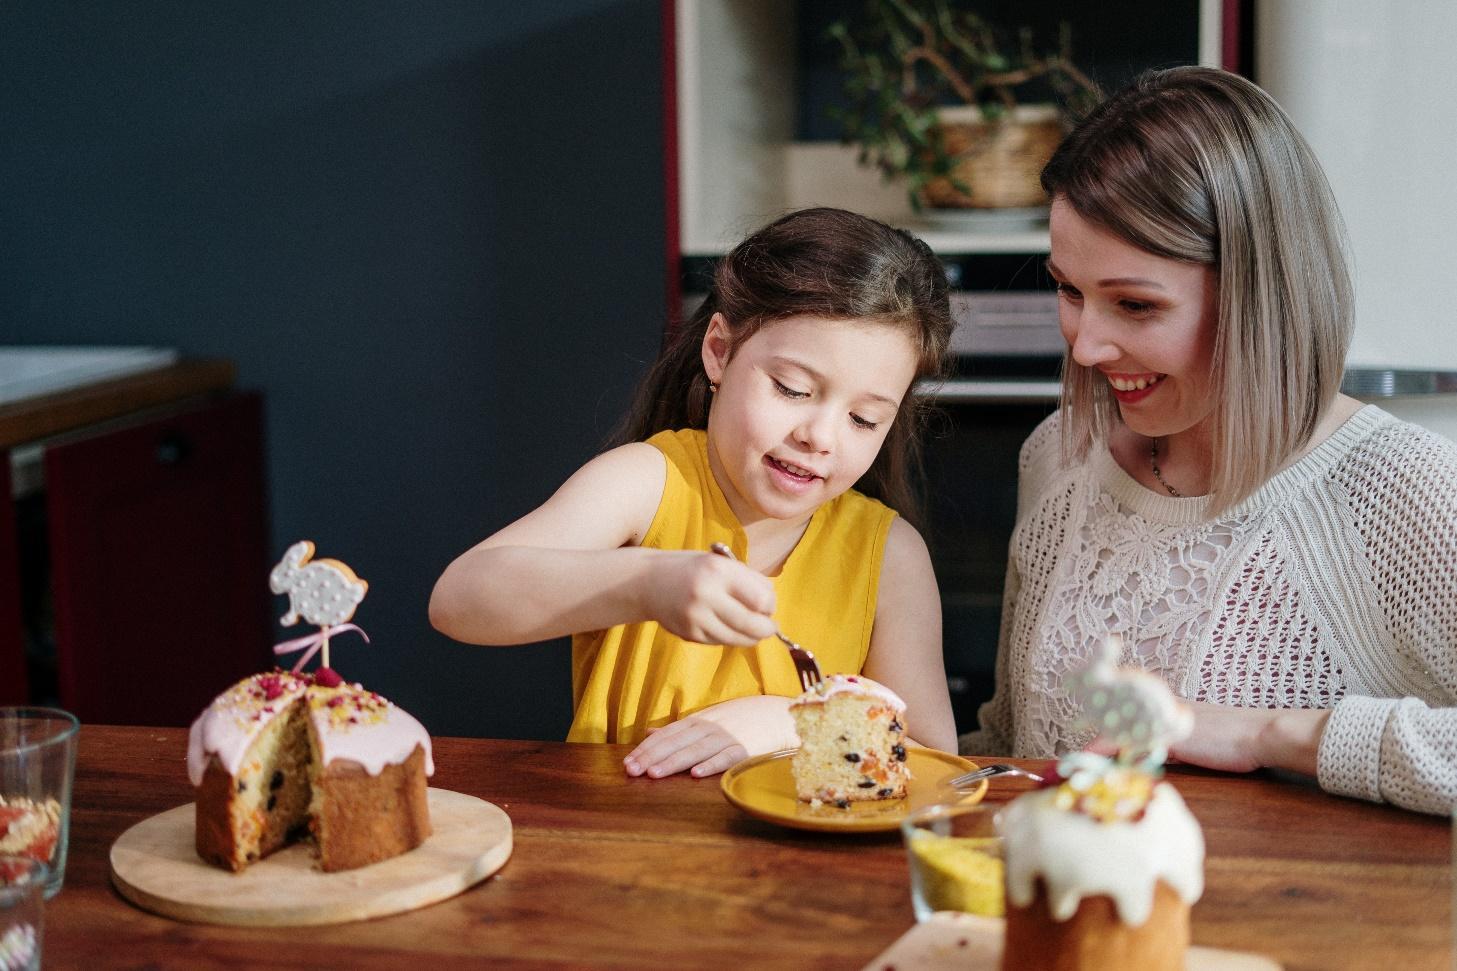 10 Easy Desserts for Busy Moms | CECJuqZfXpeILxQV2iWMCm5qp5S PQ7xbsnGvLkbgflLbF0OKykt78lbIHVgMEPpaErZ25sx08U5BIXI4HCOsyOh3ABPf6f64Tn5jgHJHLkuHANJXIecqubpo40Fa7qCBVoQaU7N